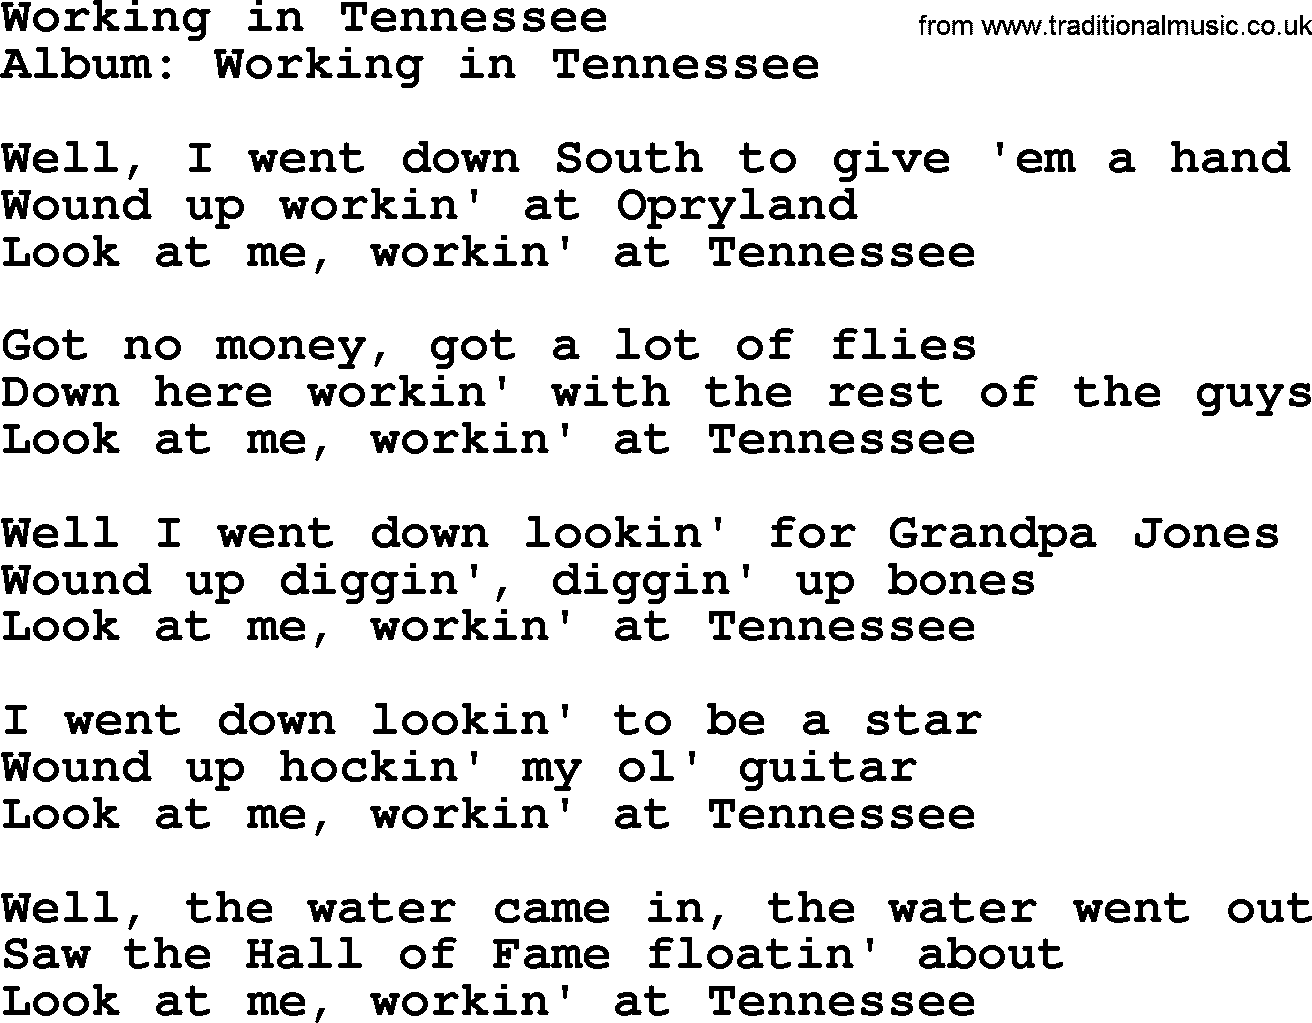 Merle Haggard song: Working In Tennessee, lyrics.